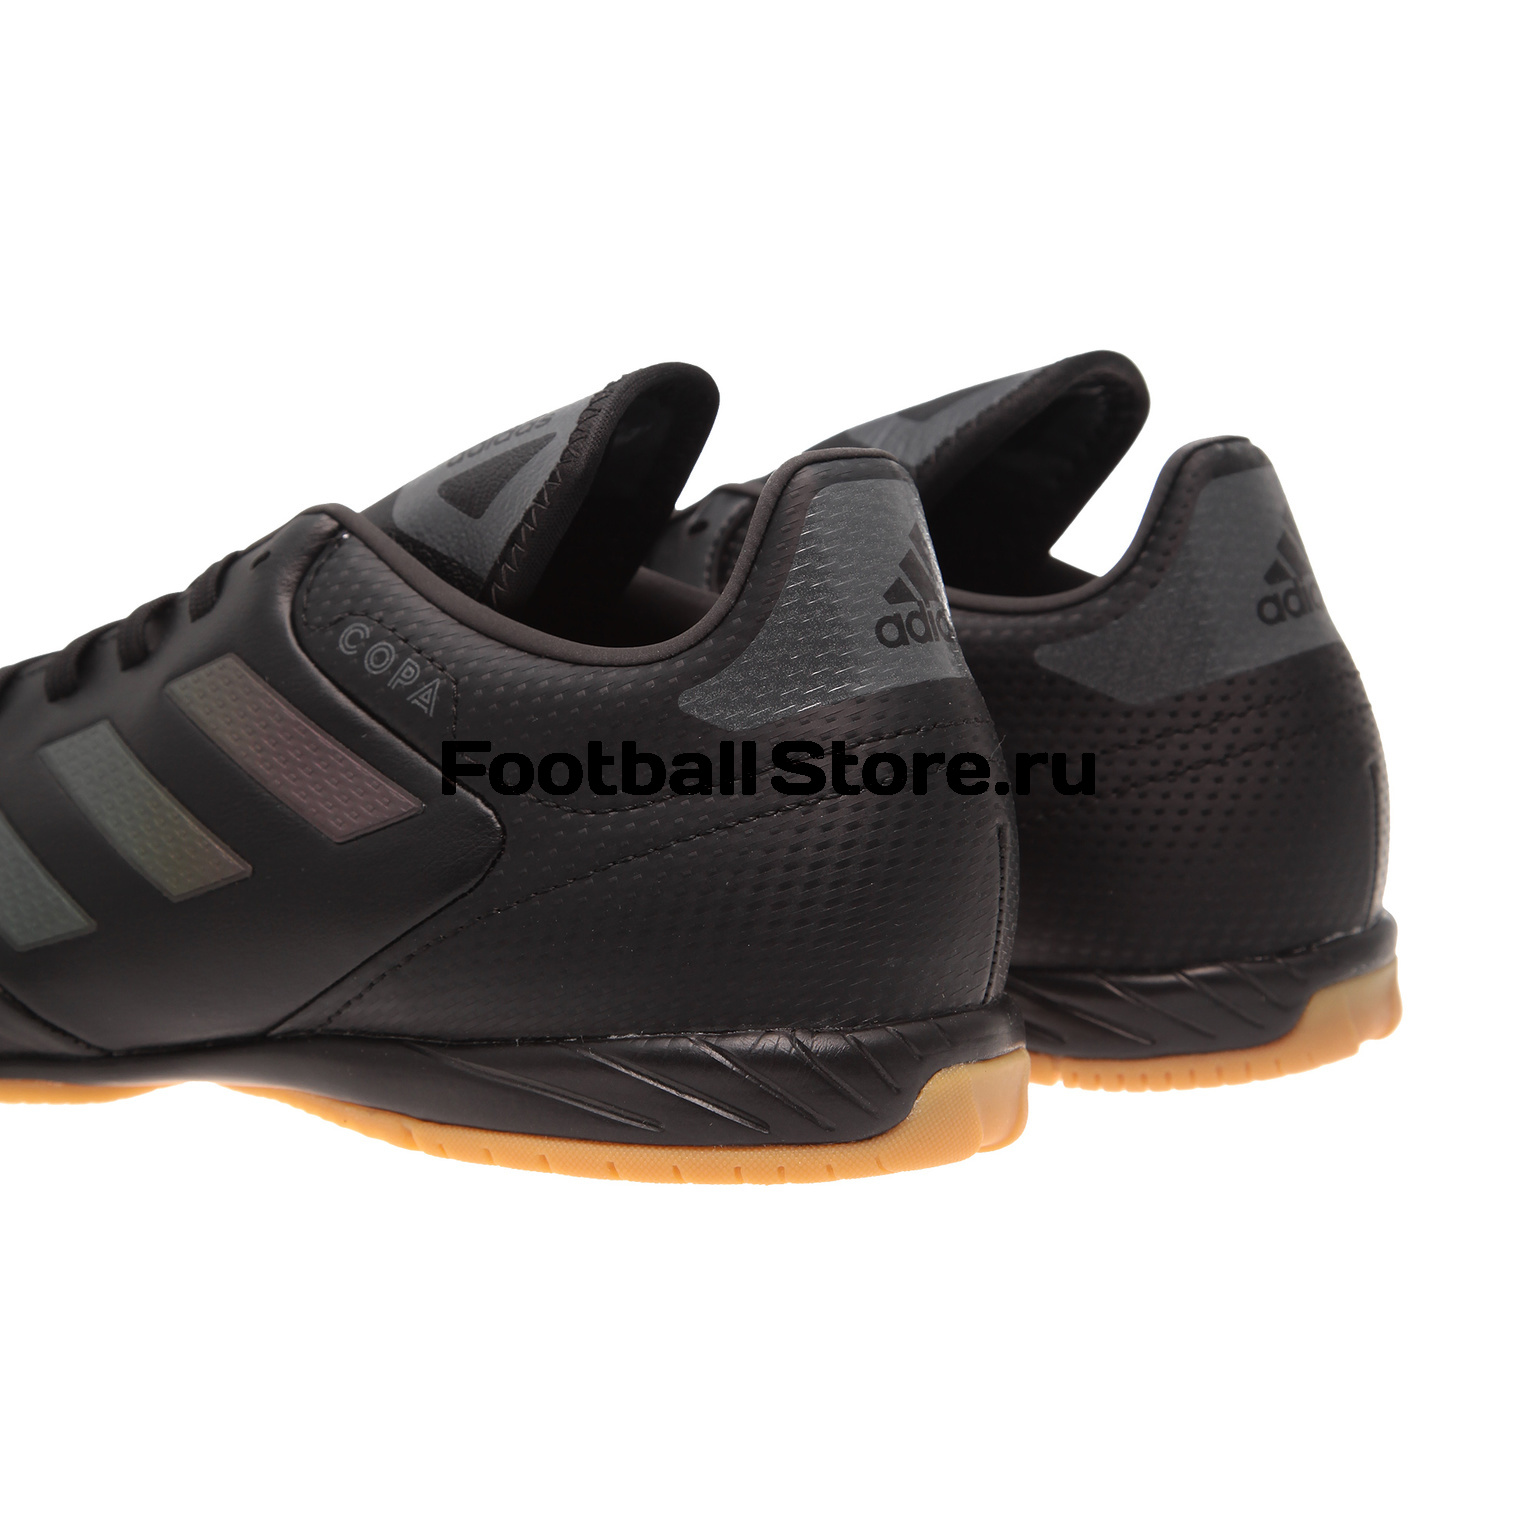 Футзалки Adidas Copa Tango 18.3 IN CP9018